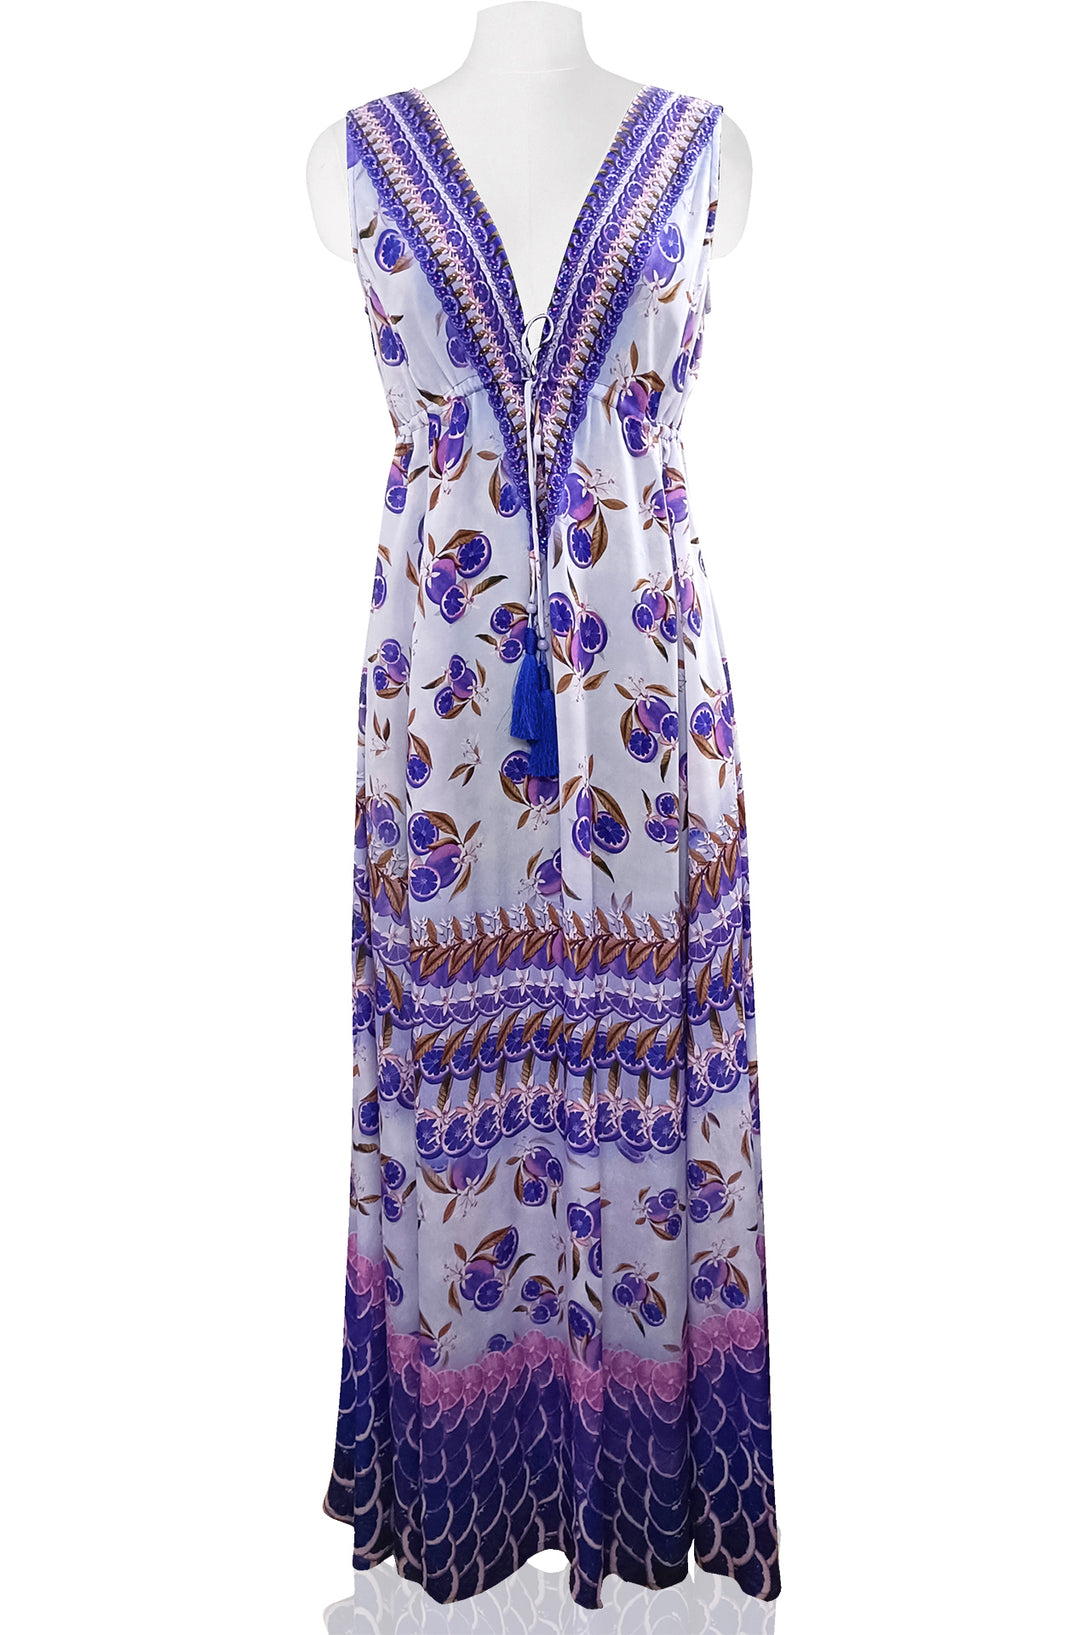  dark purple maxi dress, formal dresses for women, plus size maxi dresses,